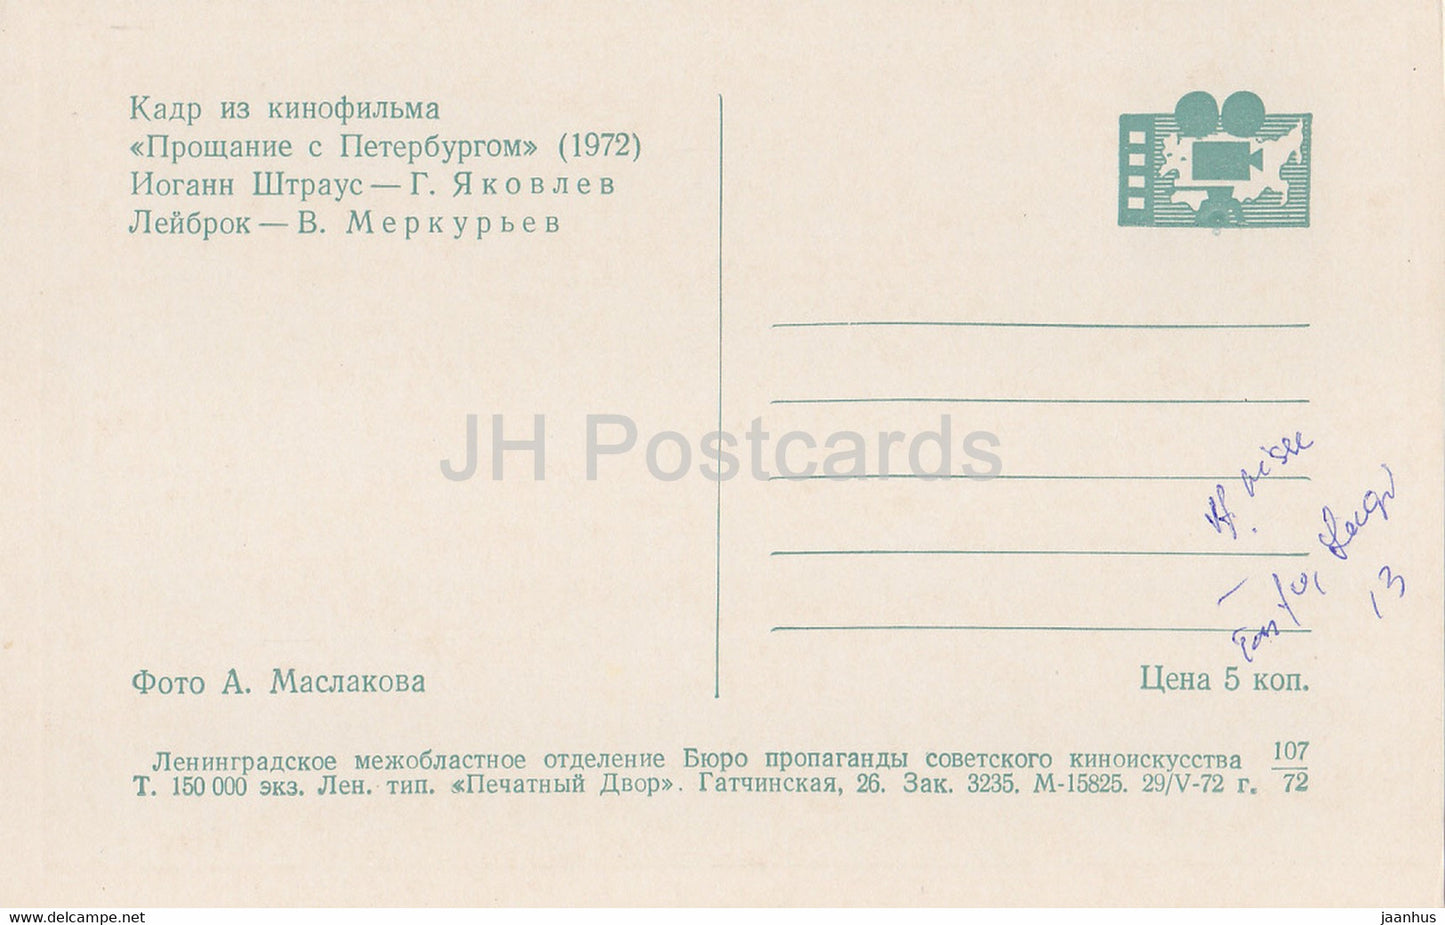 Farewell to St. Petersburg - actor G. Yakovlev and V. Merkuryev - Movie - Film - soviet - 1972 - Russia USSR - unused